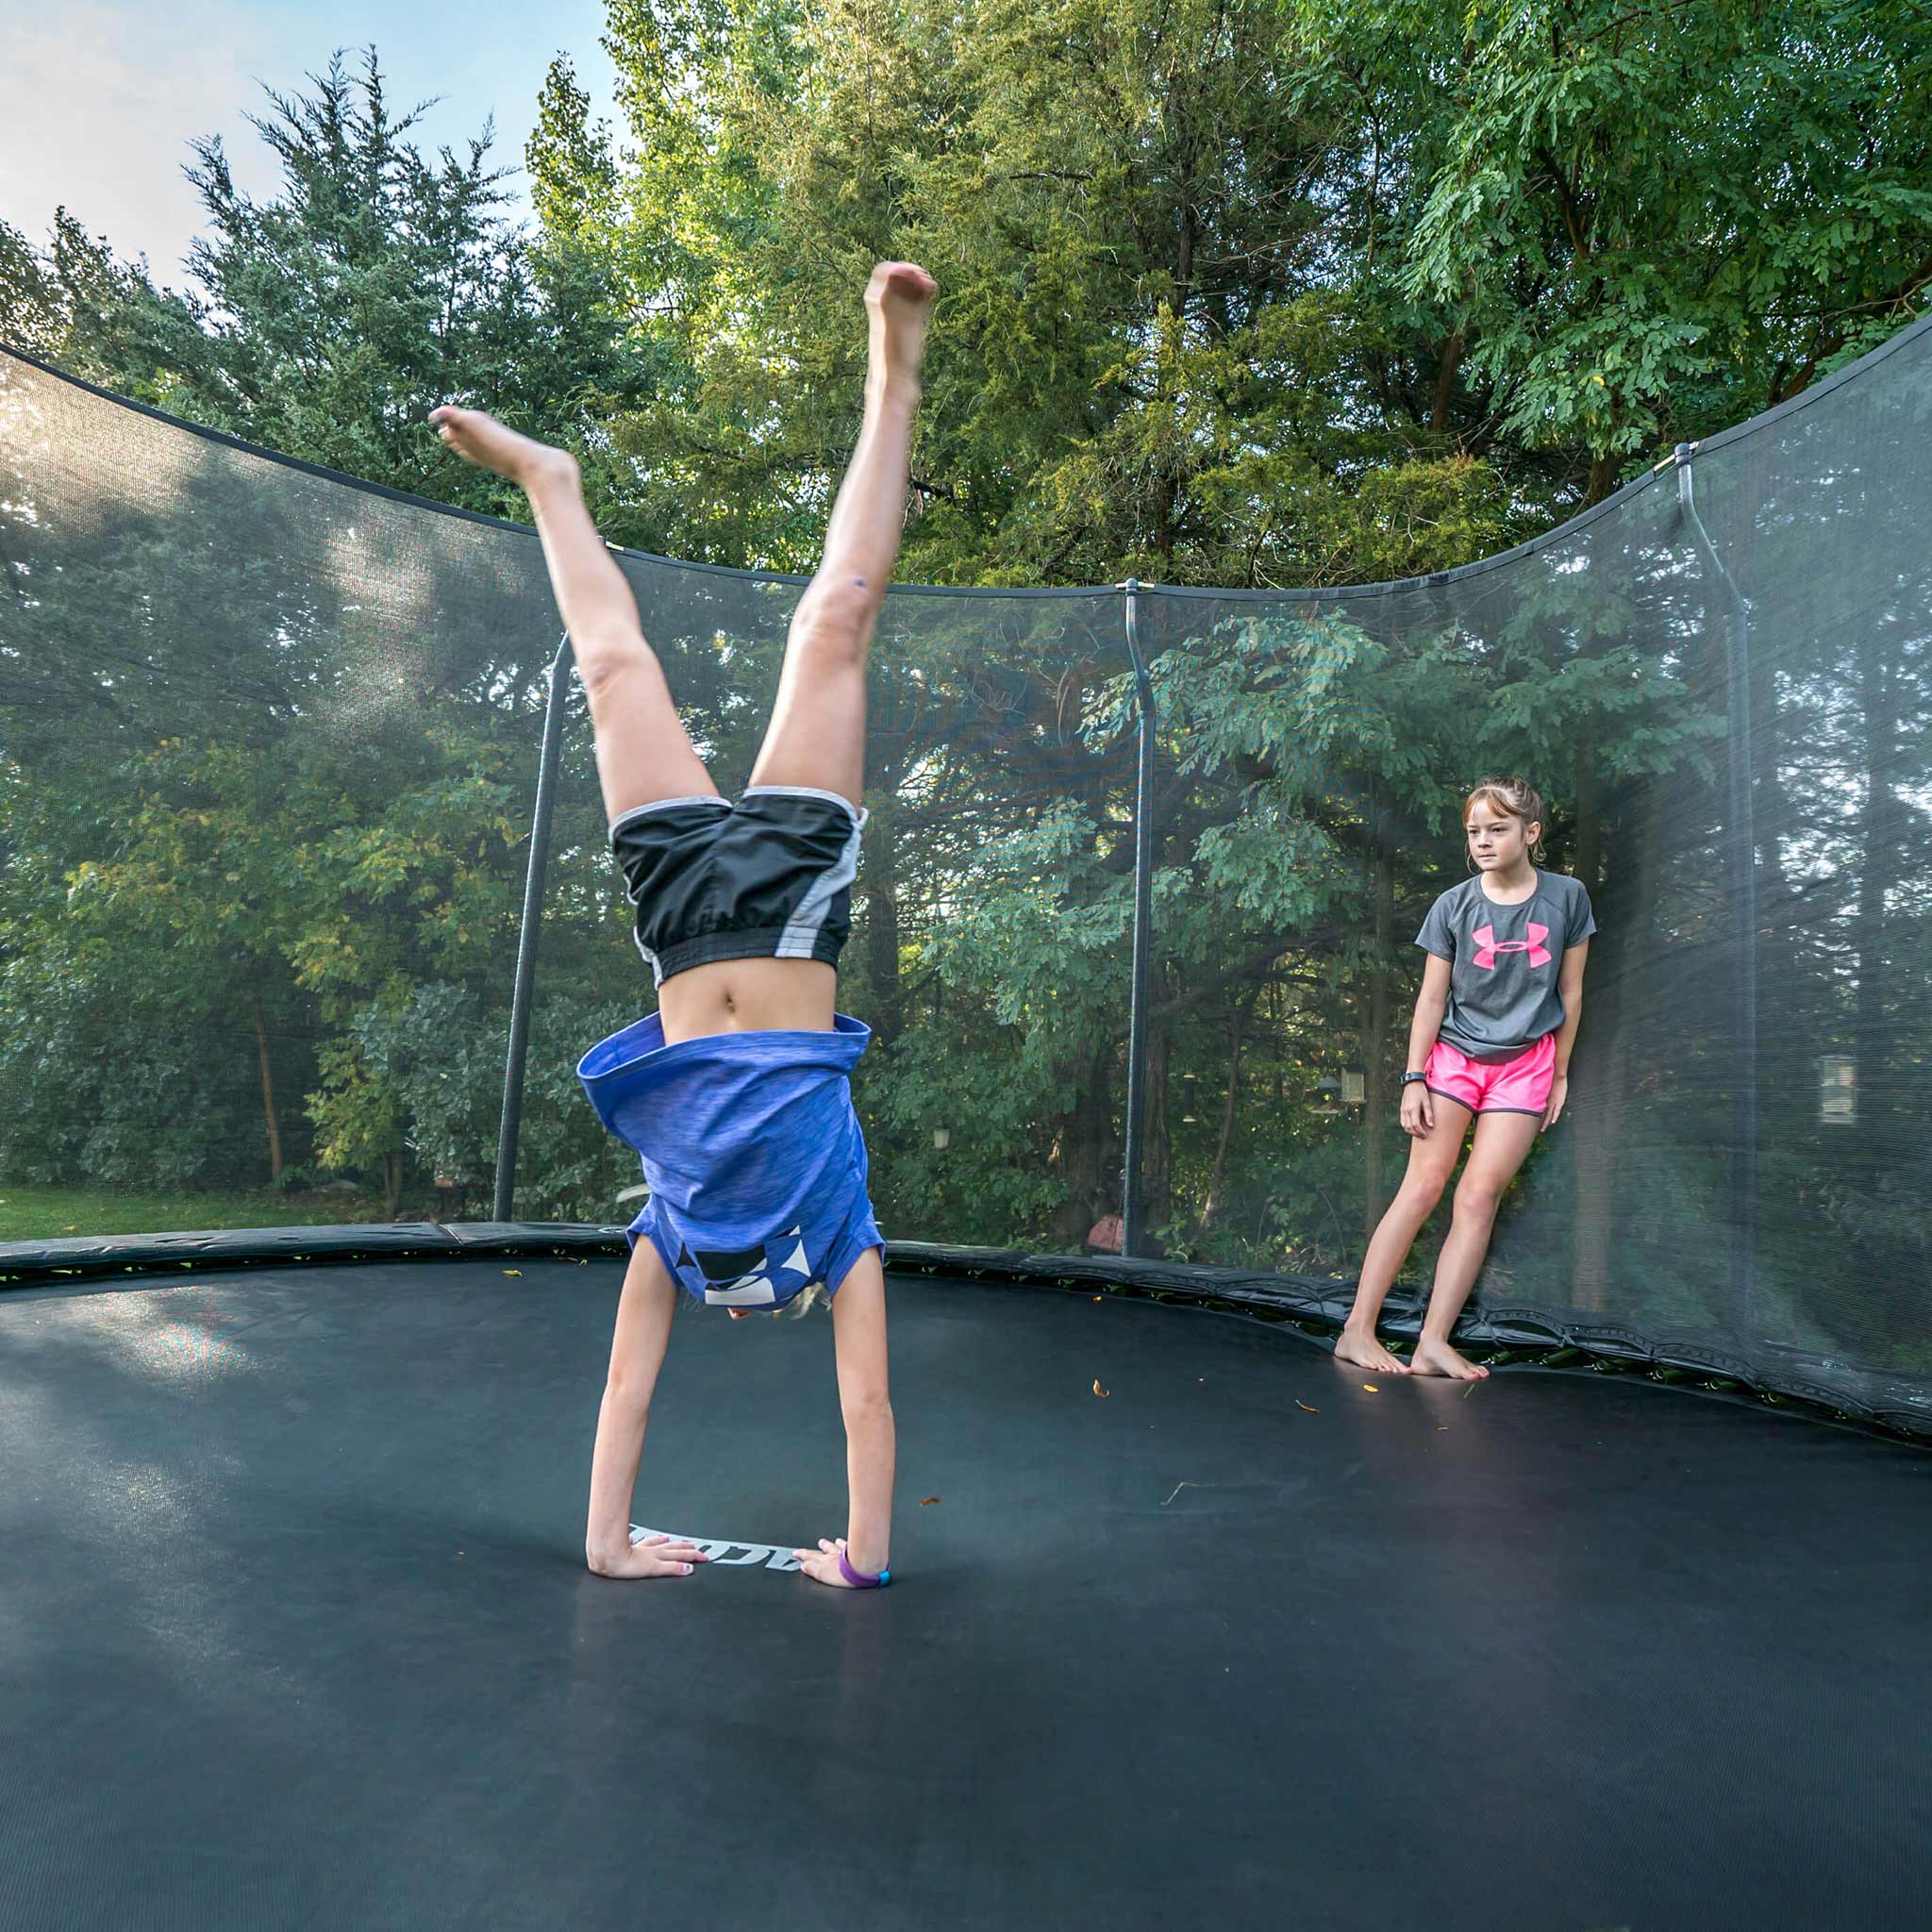 A girl handstands on an Acon trampoline, a friend watching.